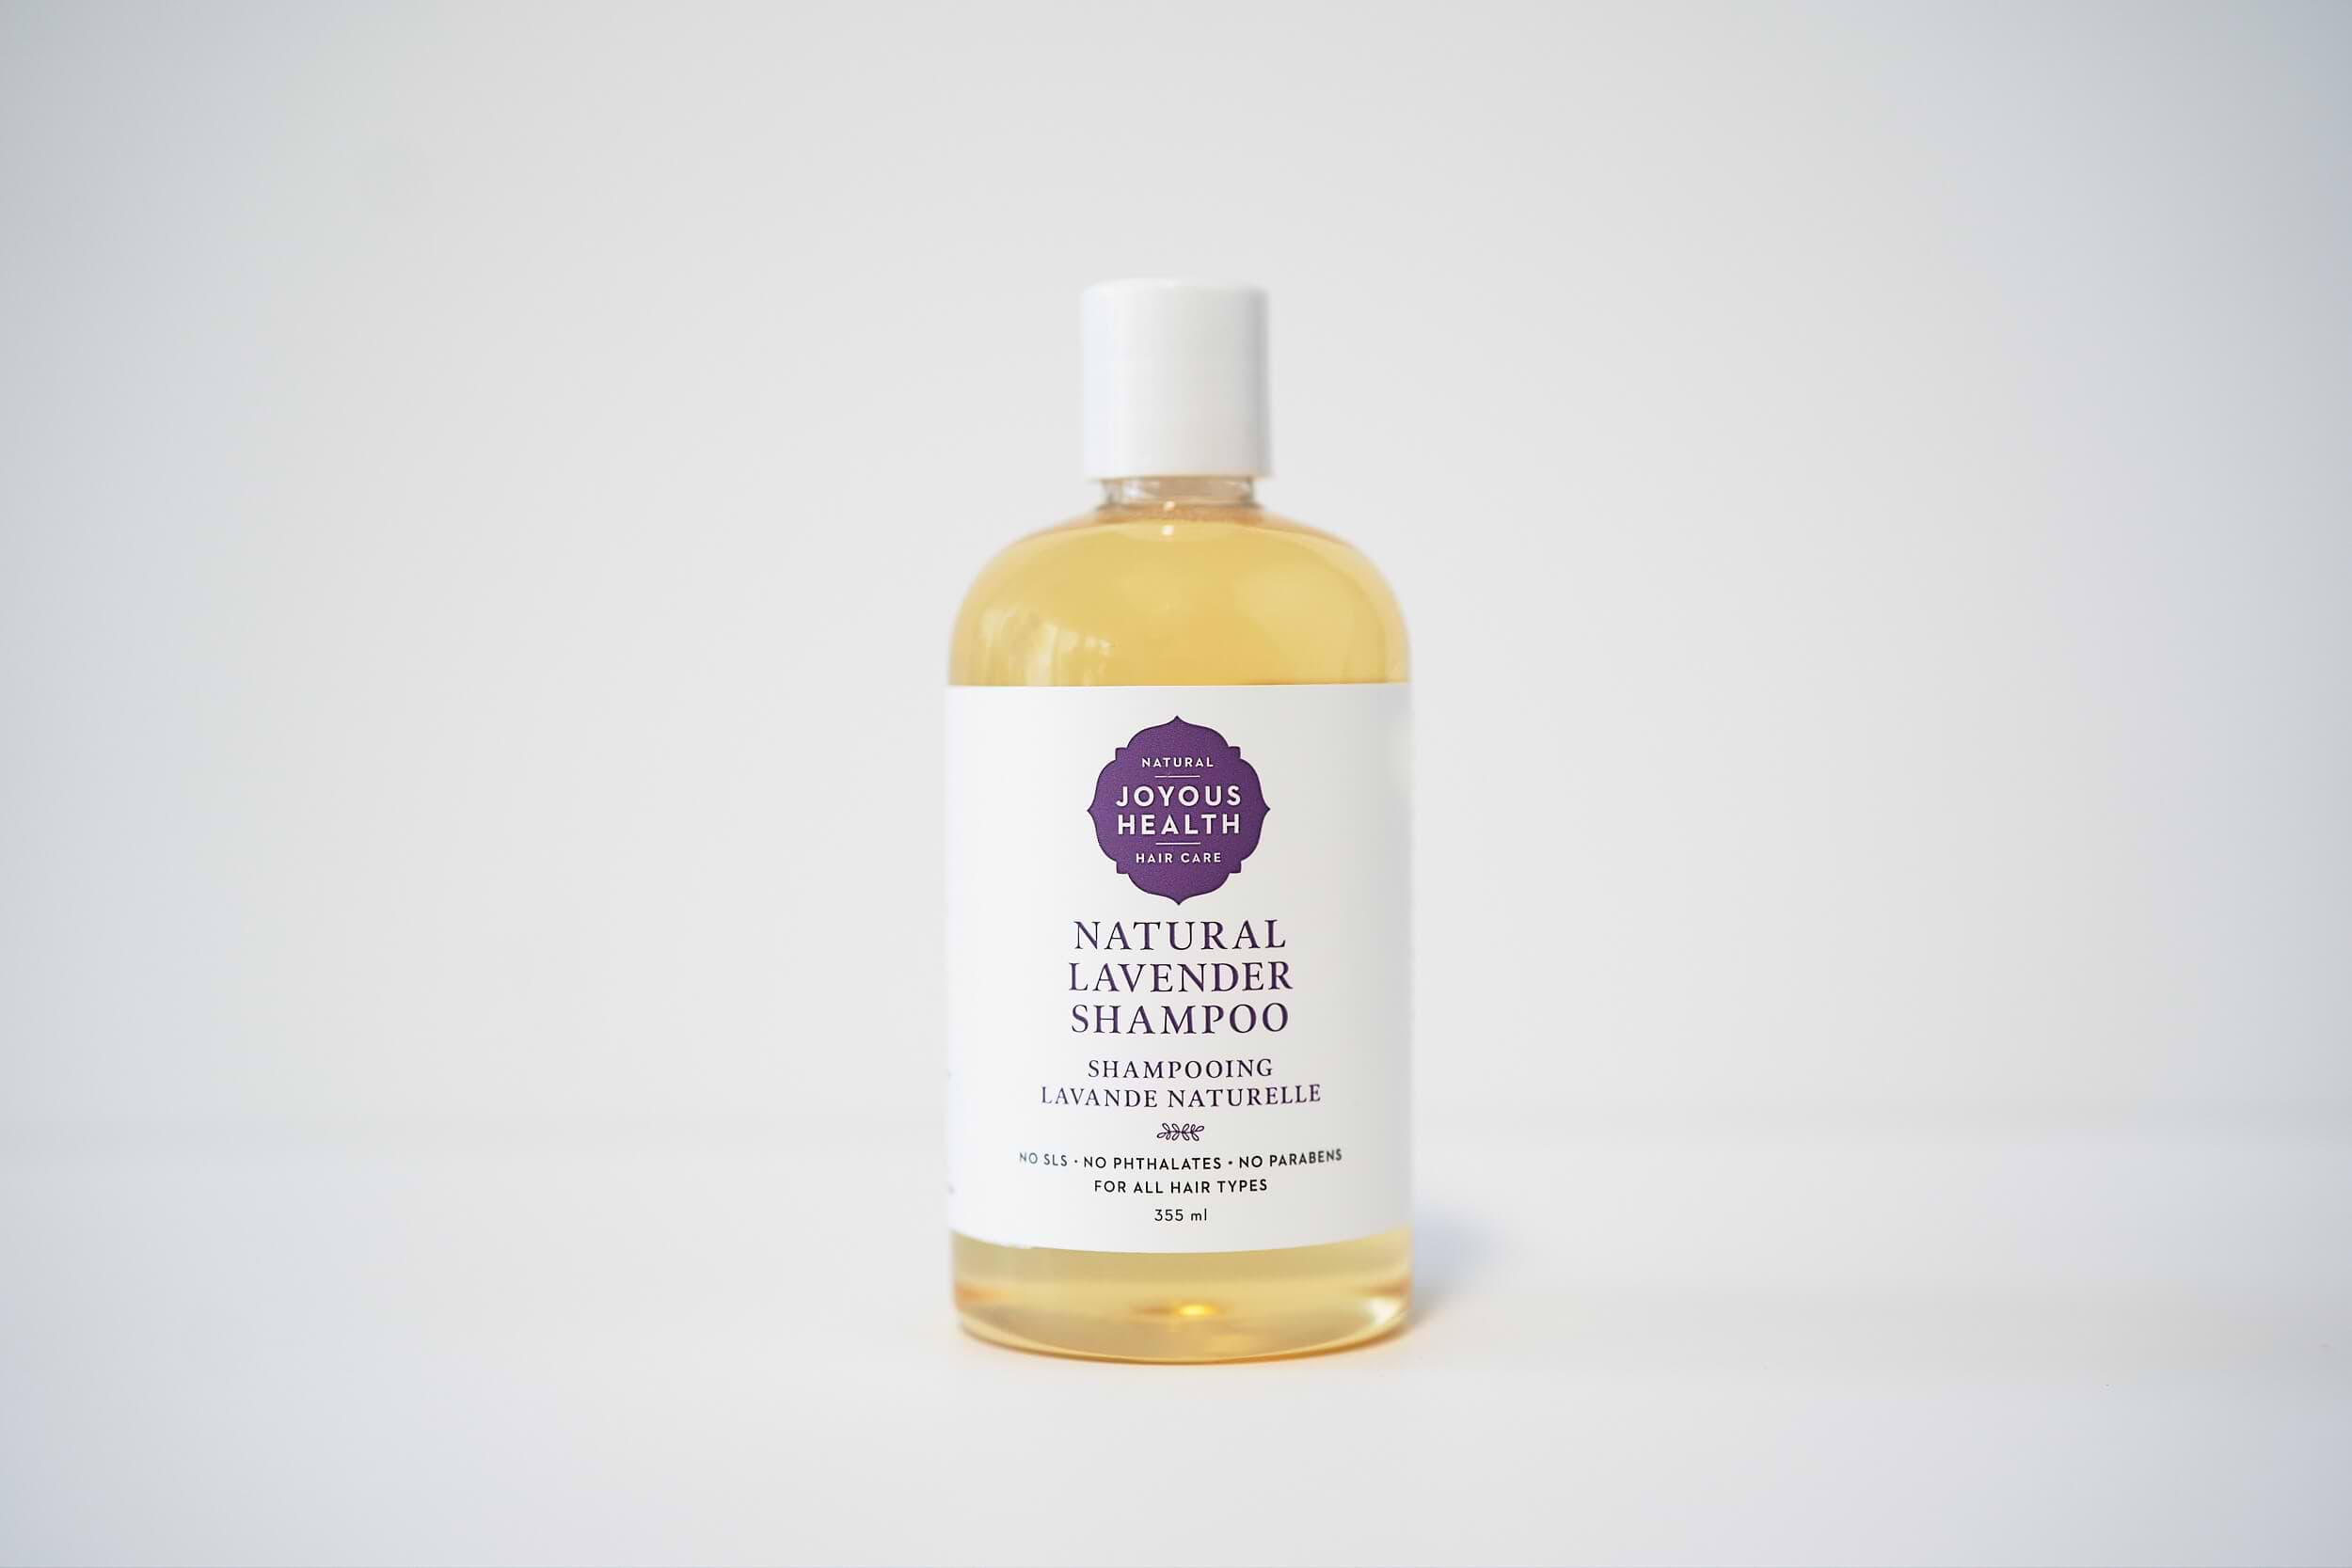 Natural Lavender Shampoo Joyous Health